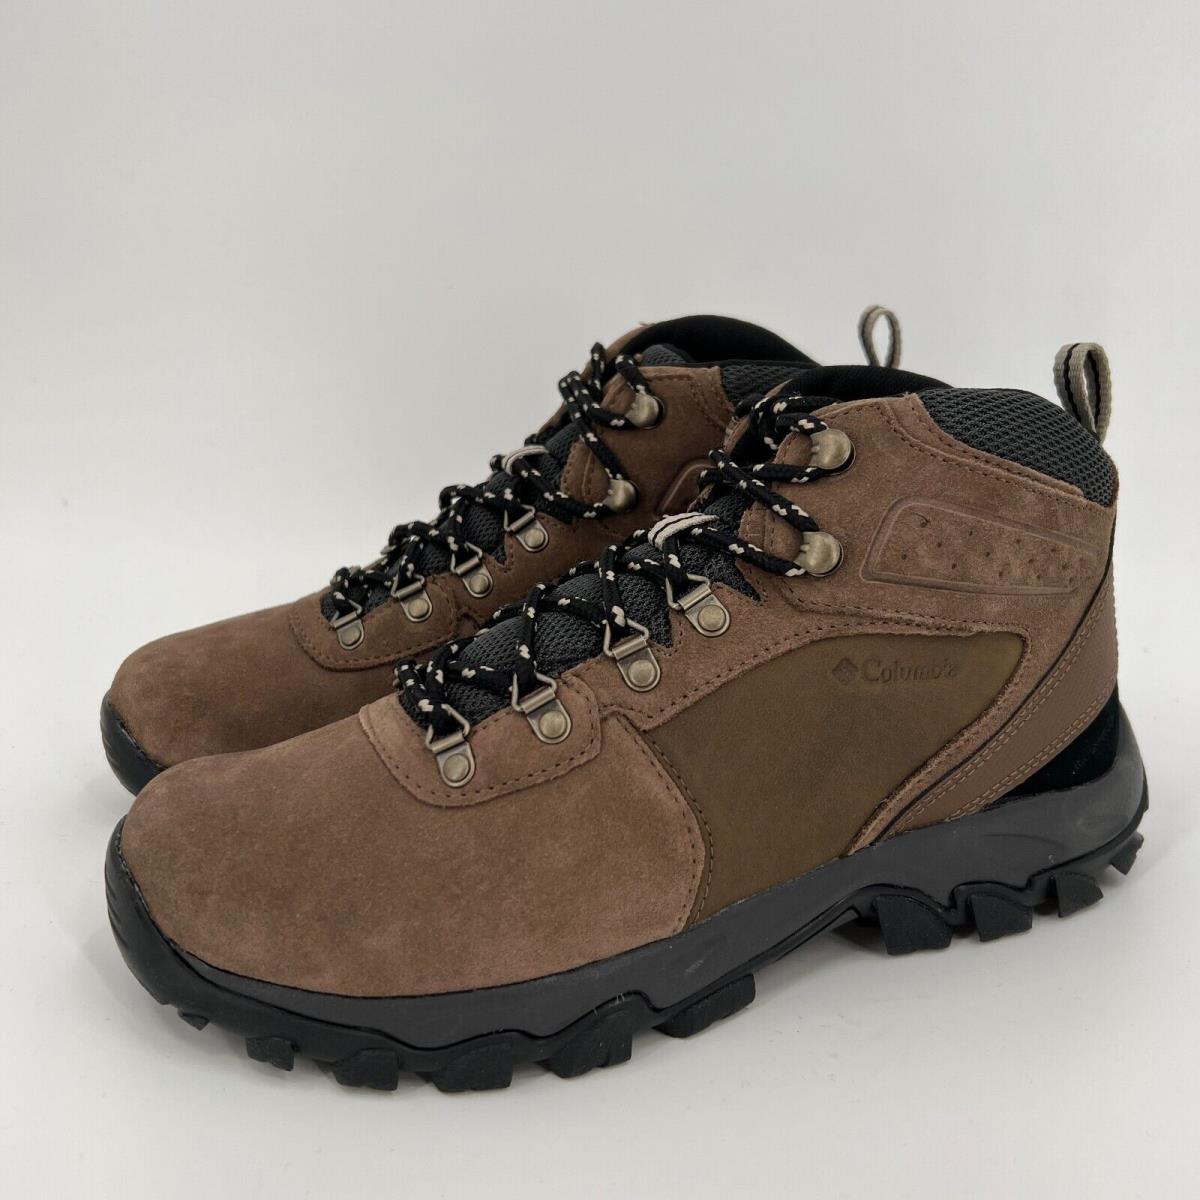 Columbia Mens Newton Ridge Plus 2 Waterproof Hiking Boots sz 8.5 Shoe BM2812